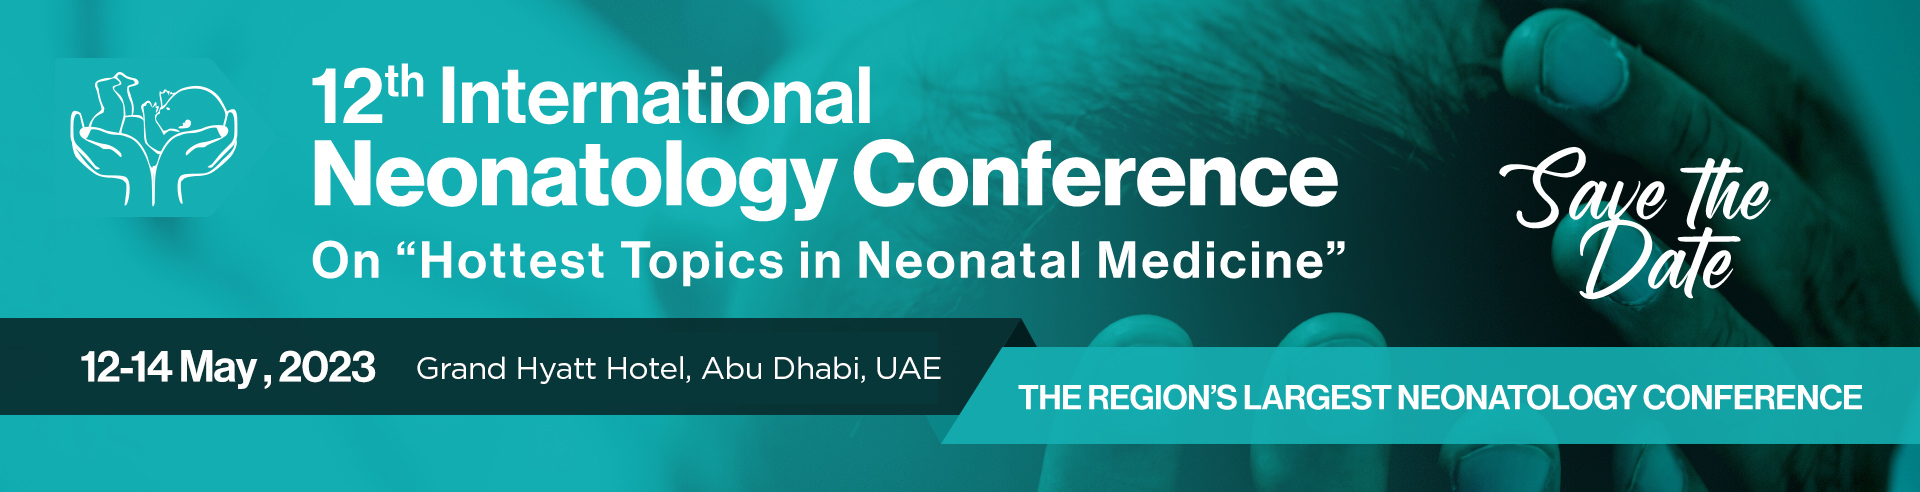 12th International Neonatology Conference on "Hottest Topics in Neonatal Medicine", Abu Dhabi, United Arab Emirates